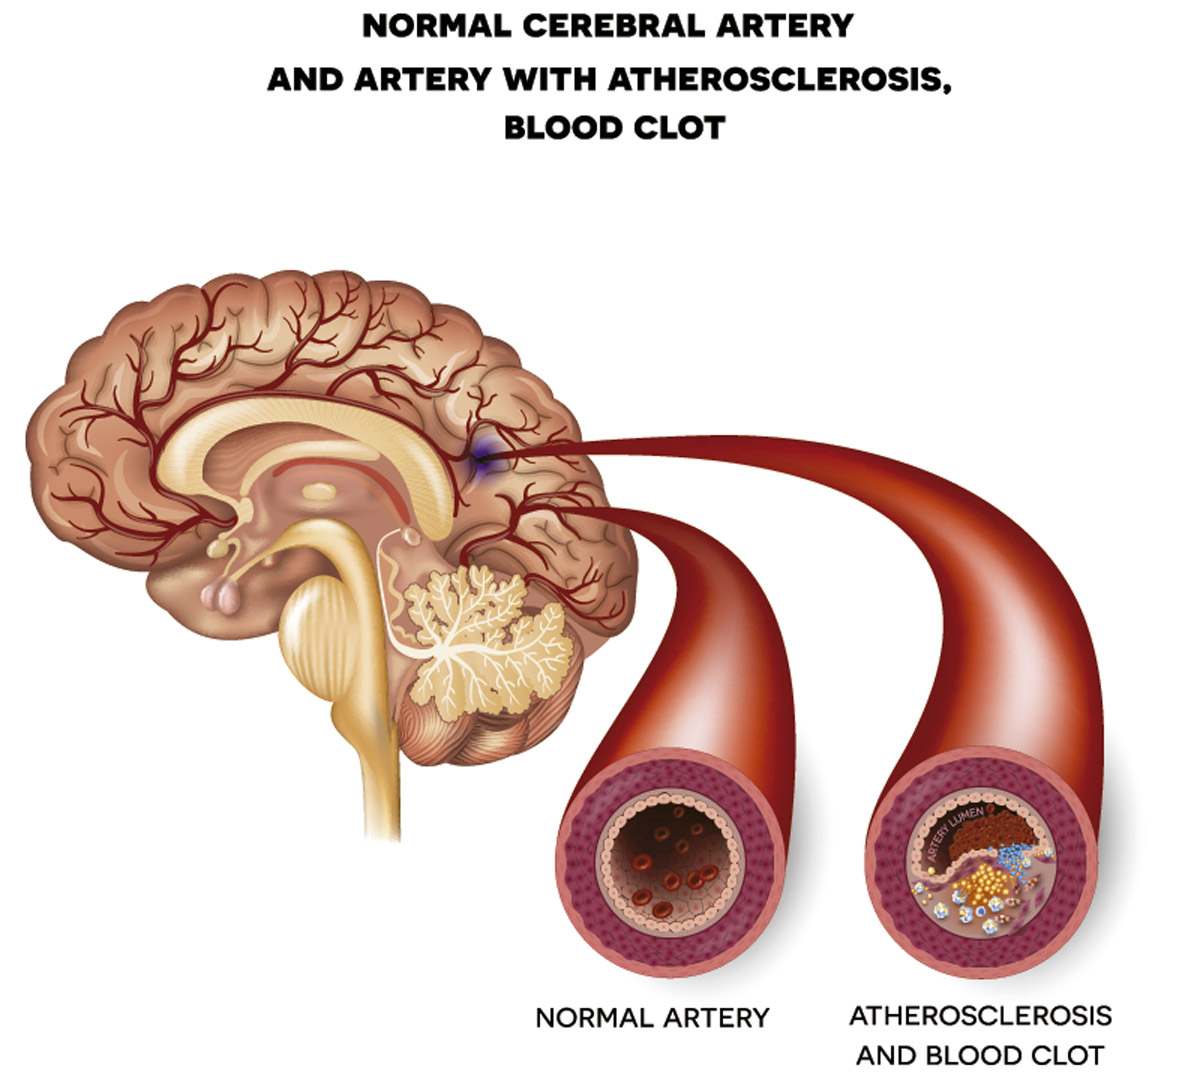 Diagrama del accidente cerebrovascular (ACV) isquémico